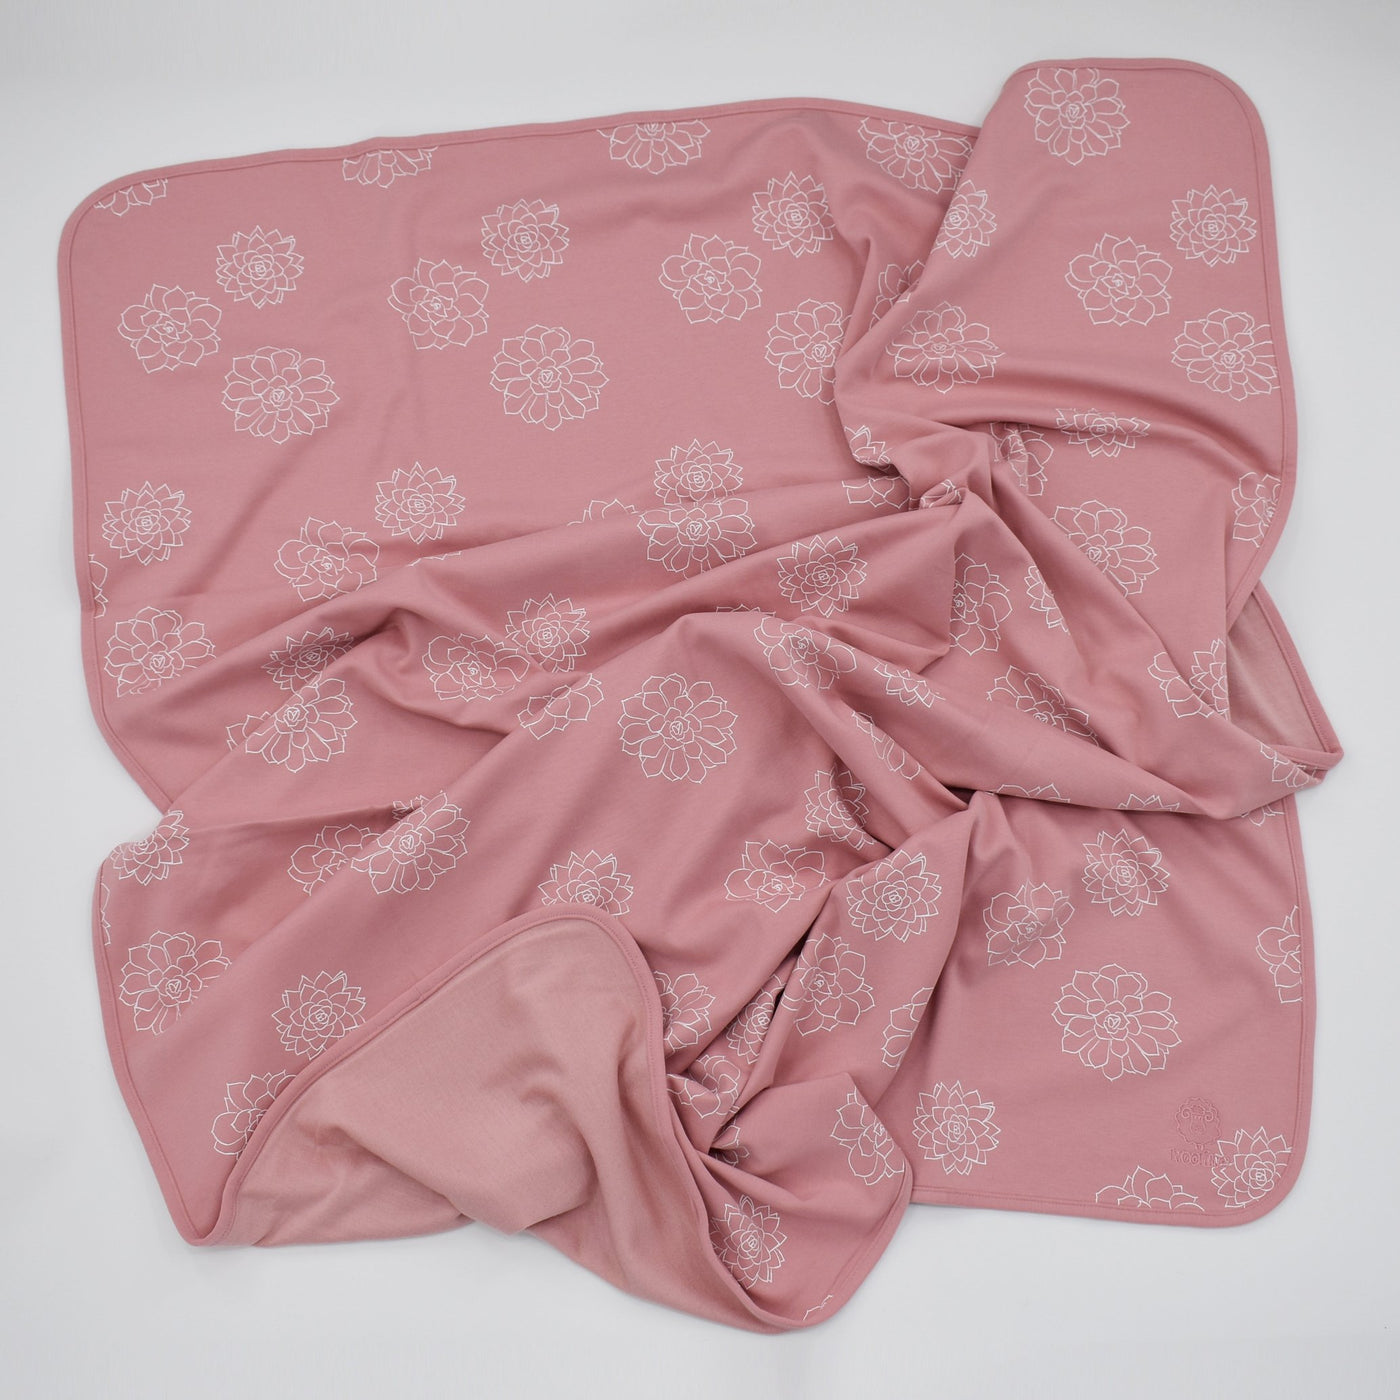 Imperfect Toddler Blanket, 4 Season™ Merino Wool & Organic Cotton Blanket, 52.5" x 40", Succulent